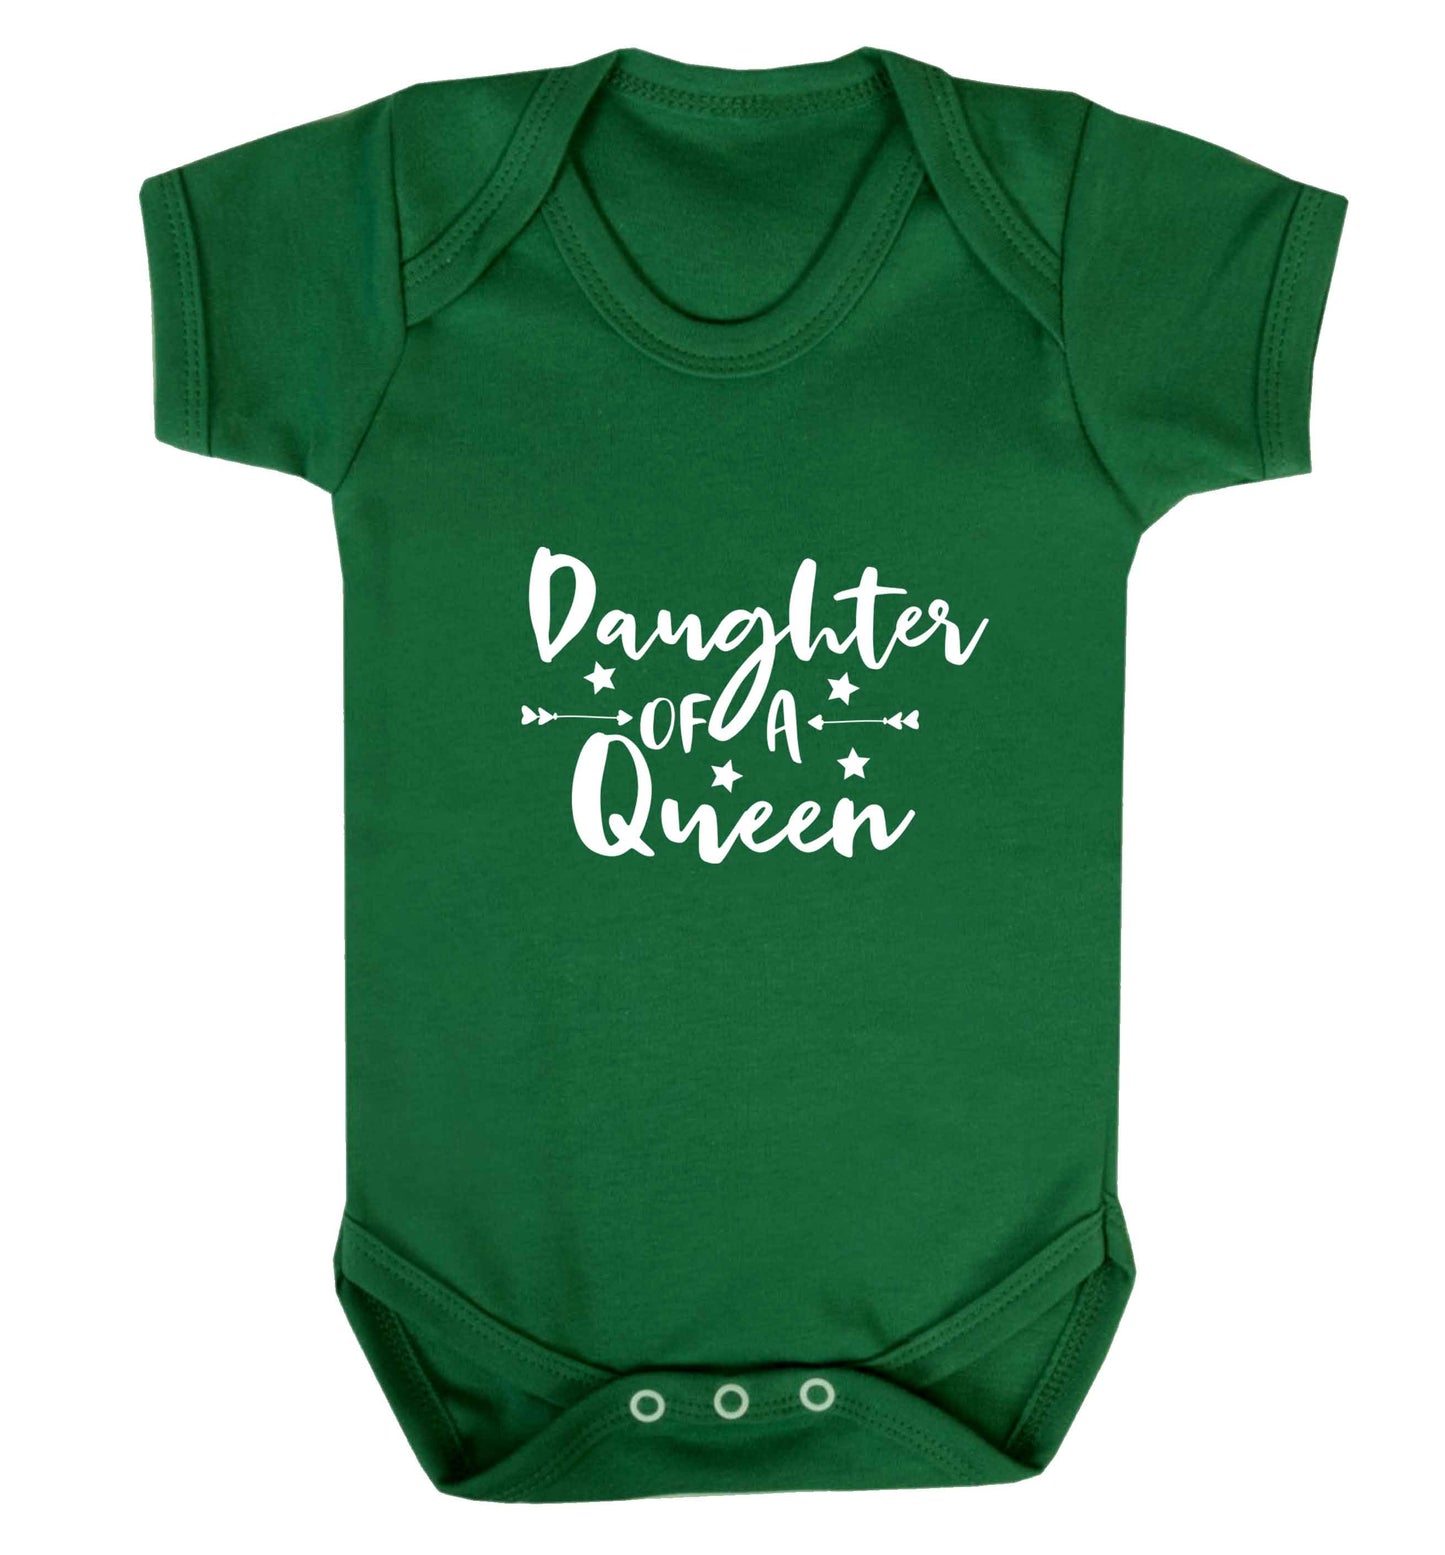 Daughter of a Queen baby vest green 18-24 months